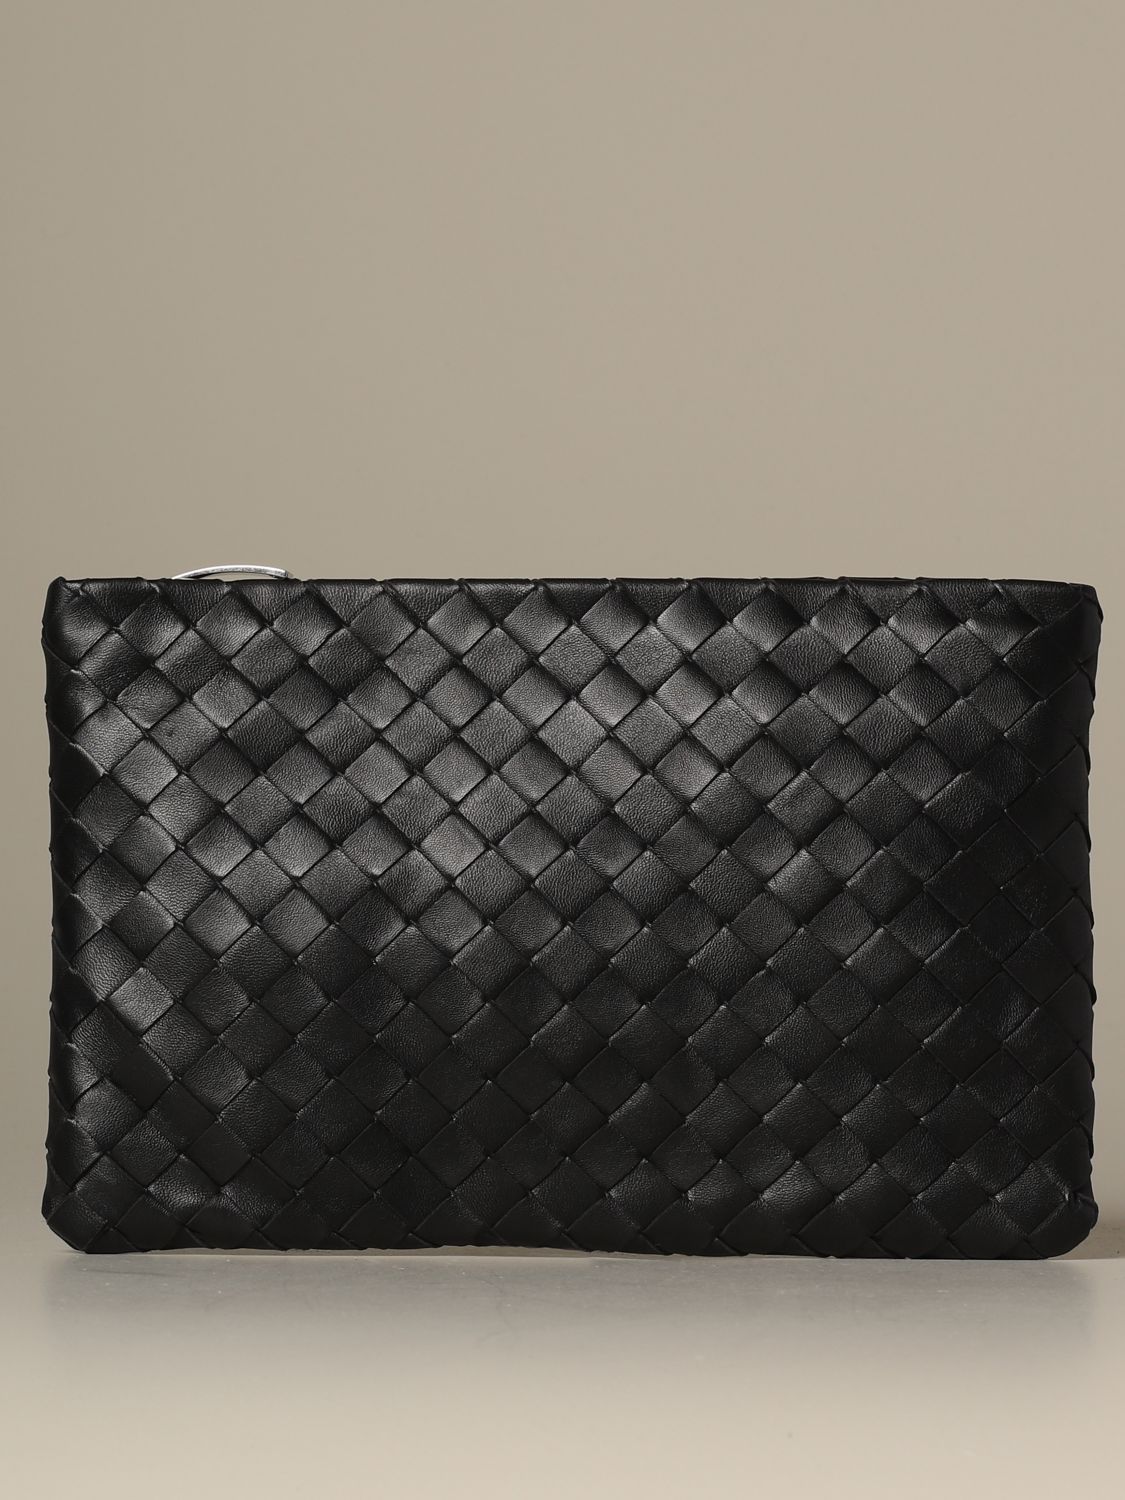 BOTTEGA VENETA: clutch bag woven nappa - Black | Bottega Veneta clutch 608232 online at GIGLIO.COM